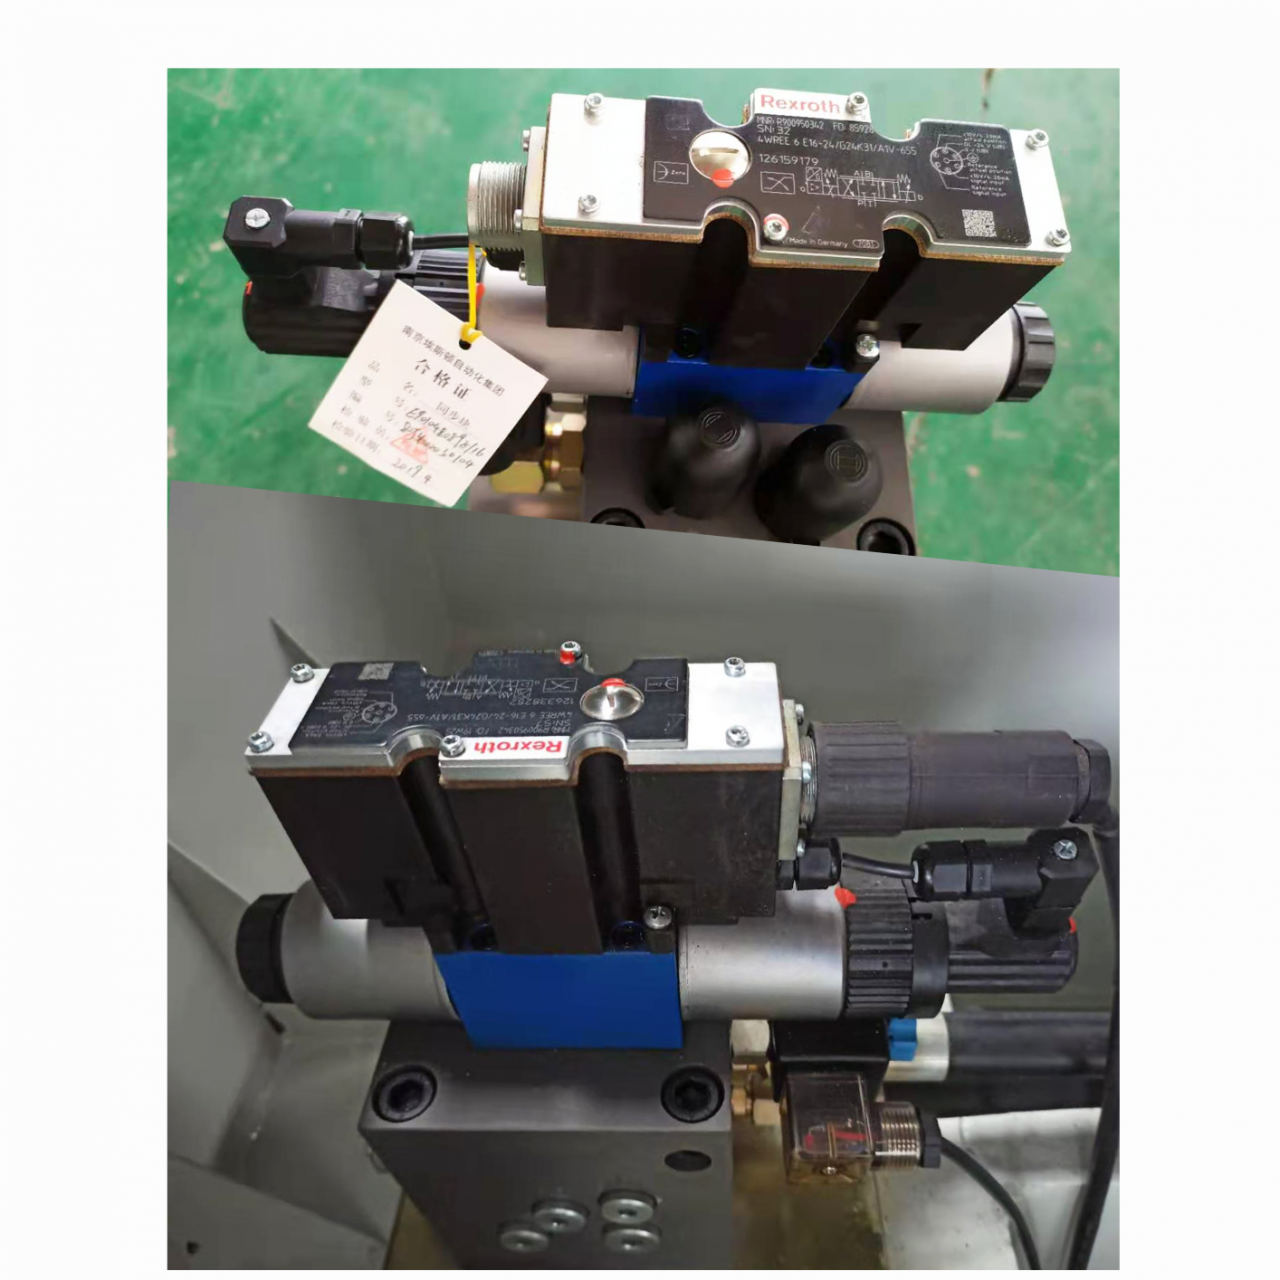 Da-66t kontrollues Cnc Brake Hidraulic Press Me System Screen Touch 3D